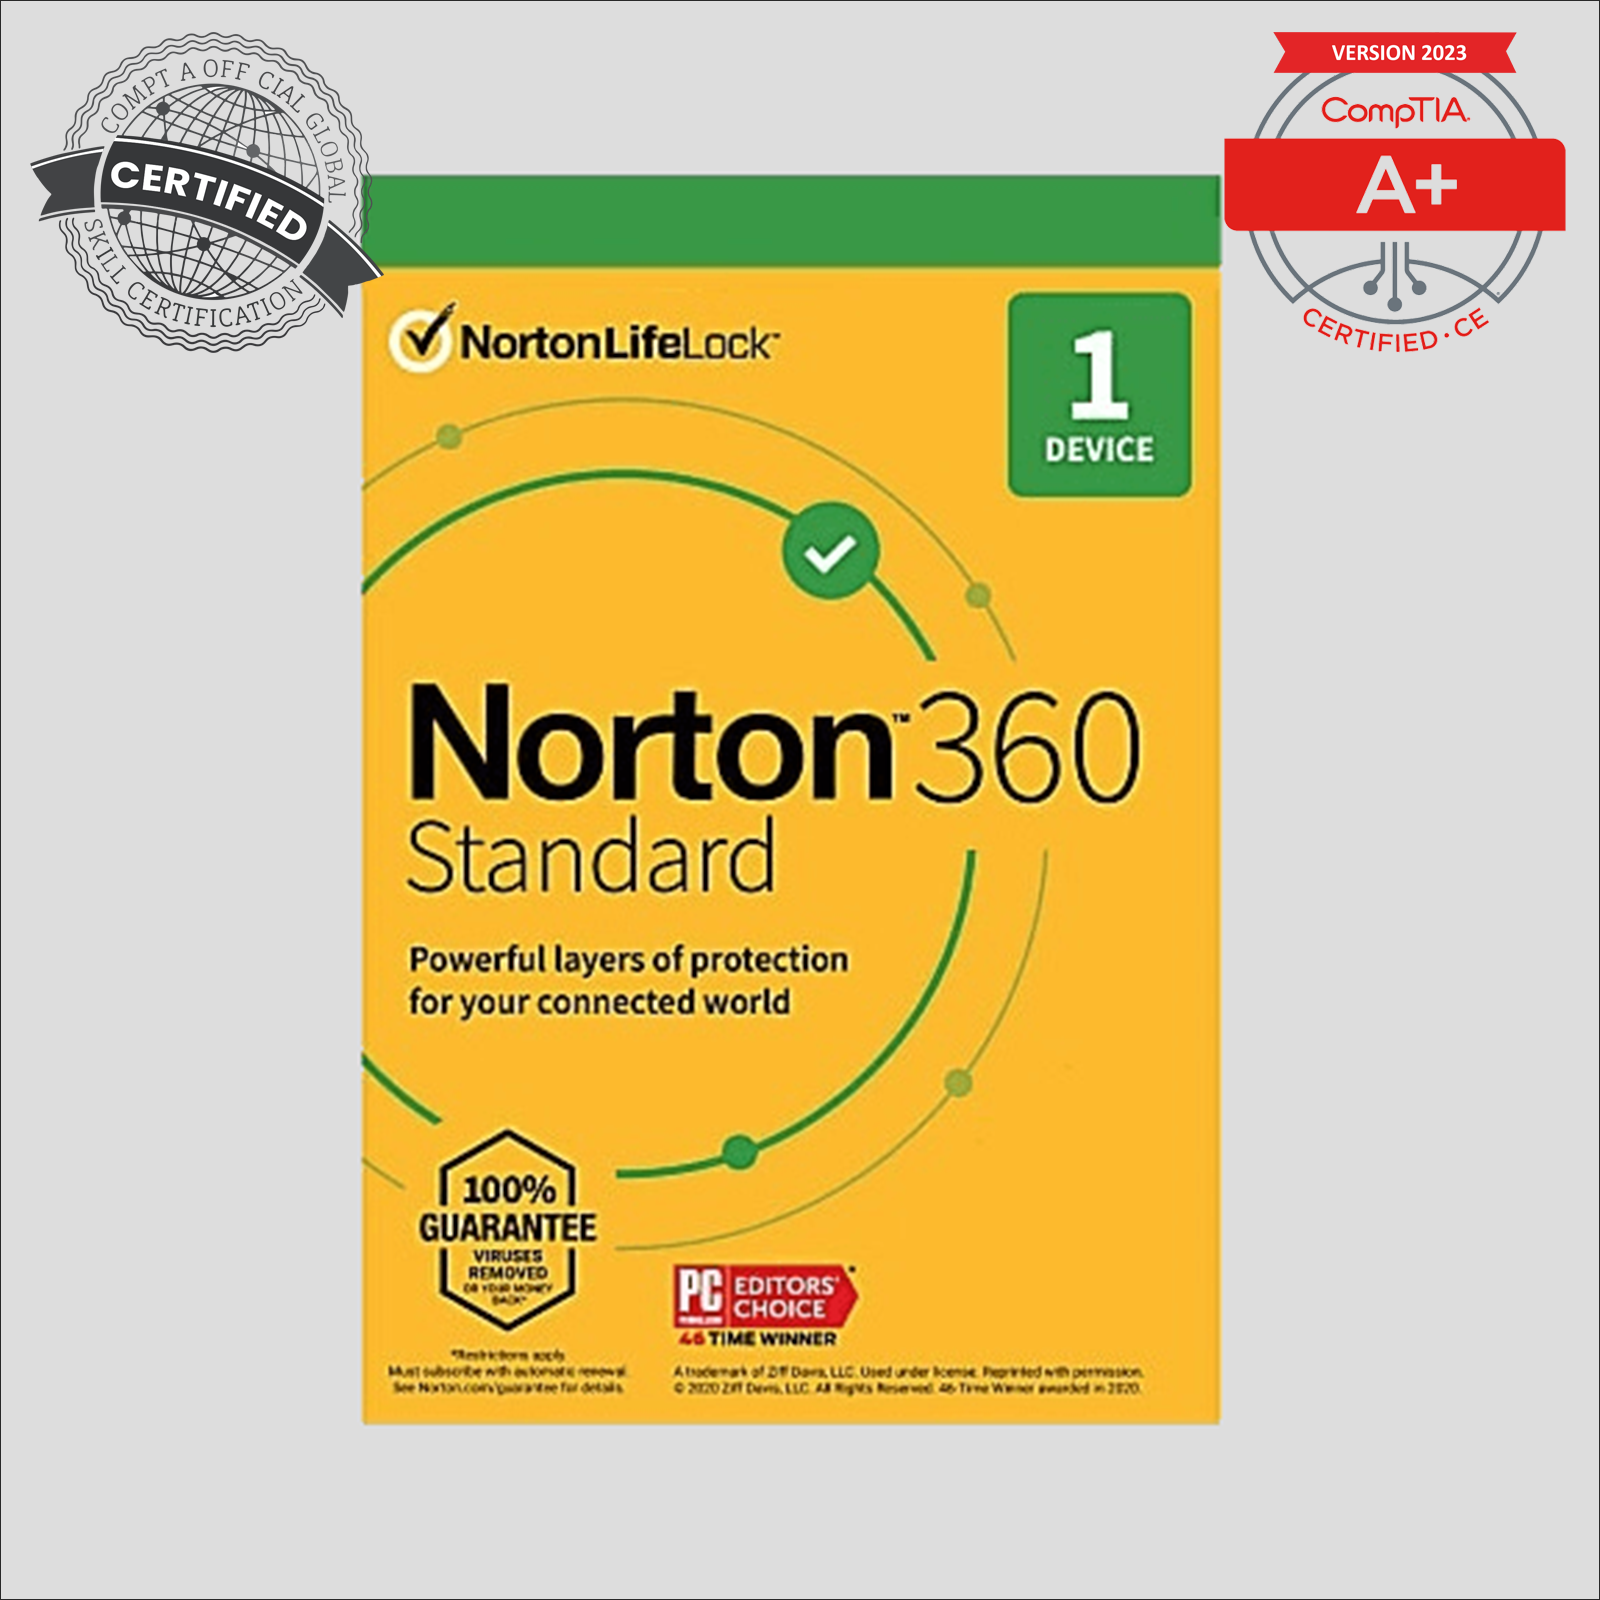 Norton 360 Standard - 1-Year / 1-Device - Canada